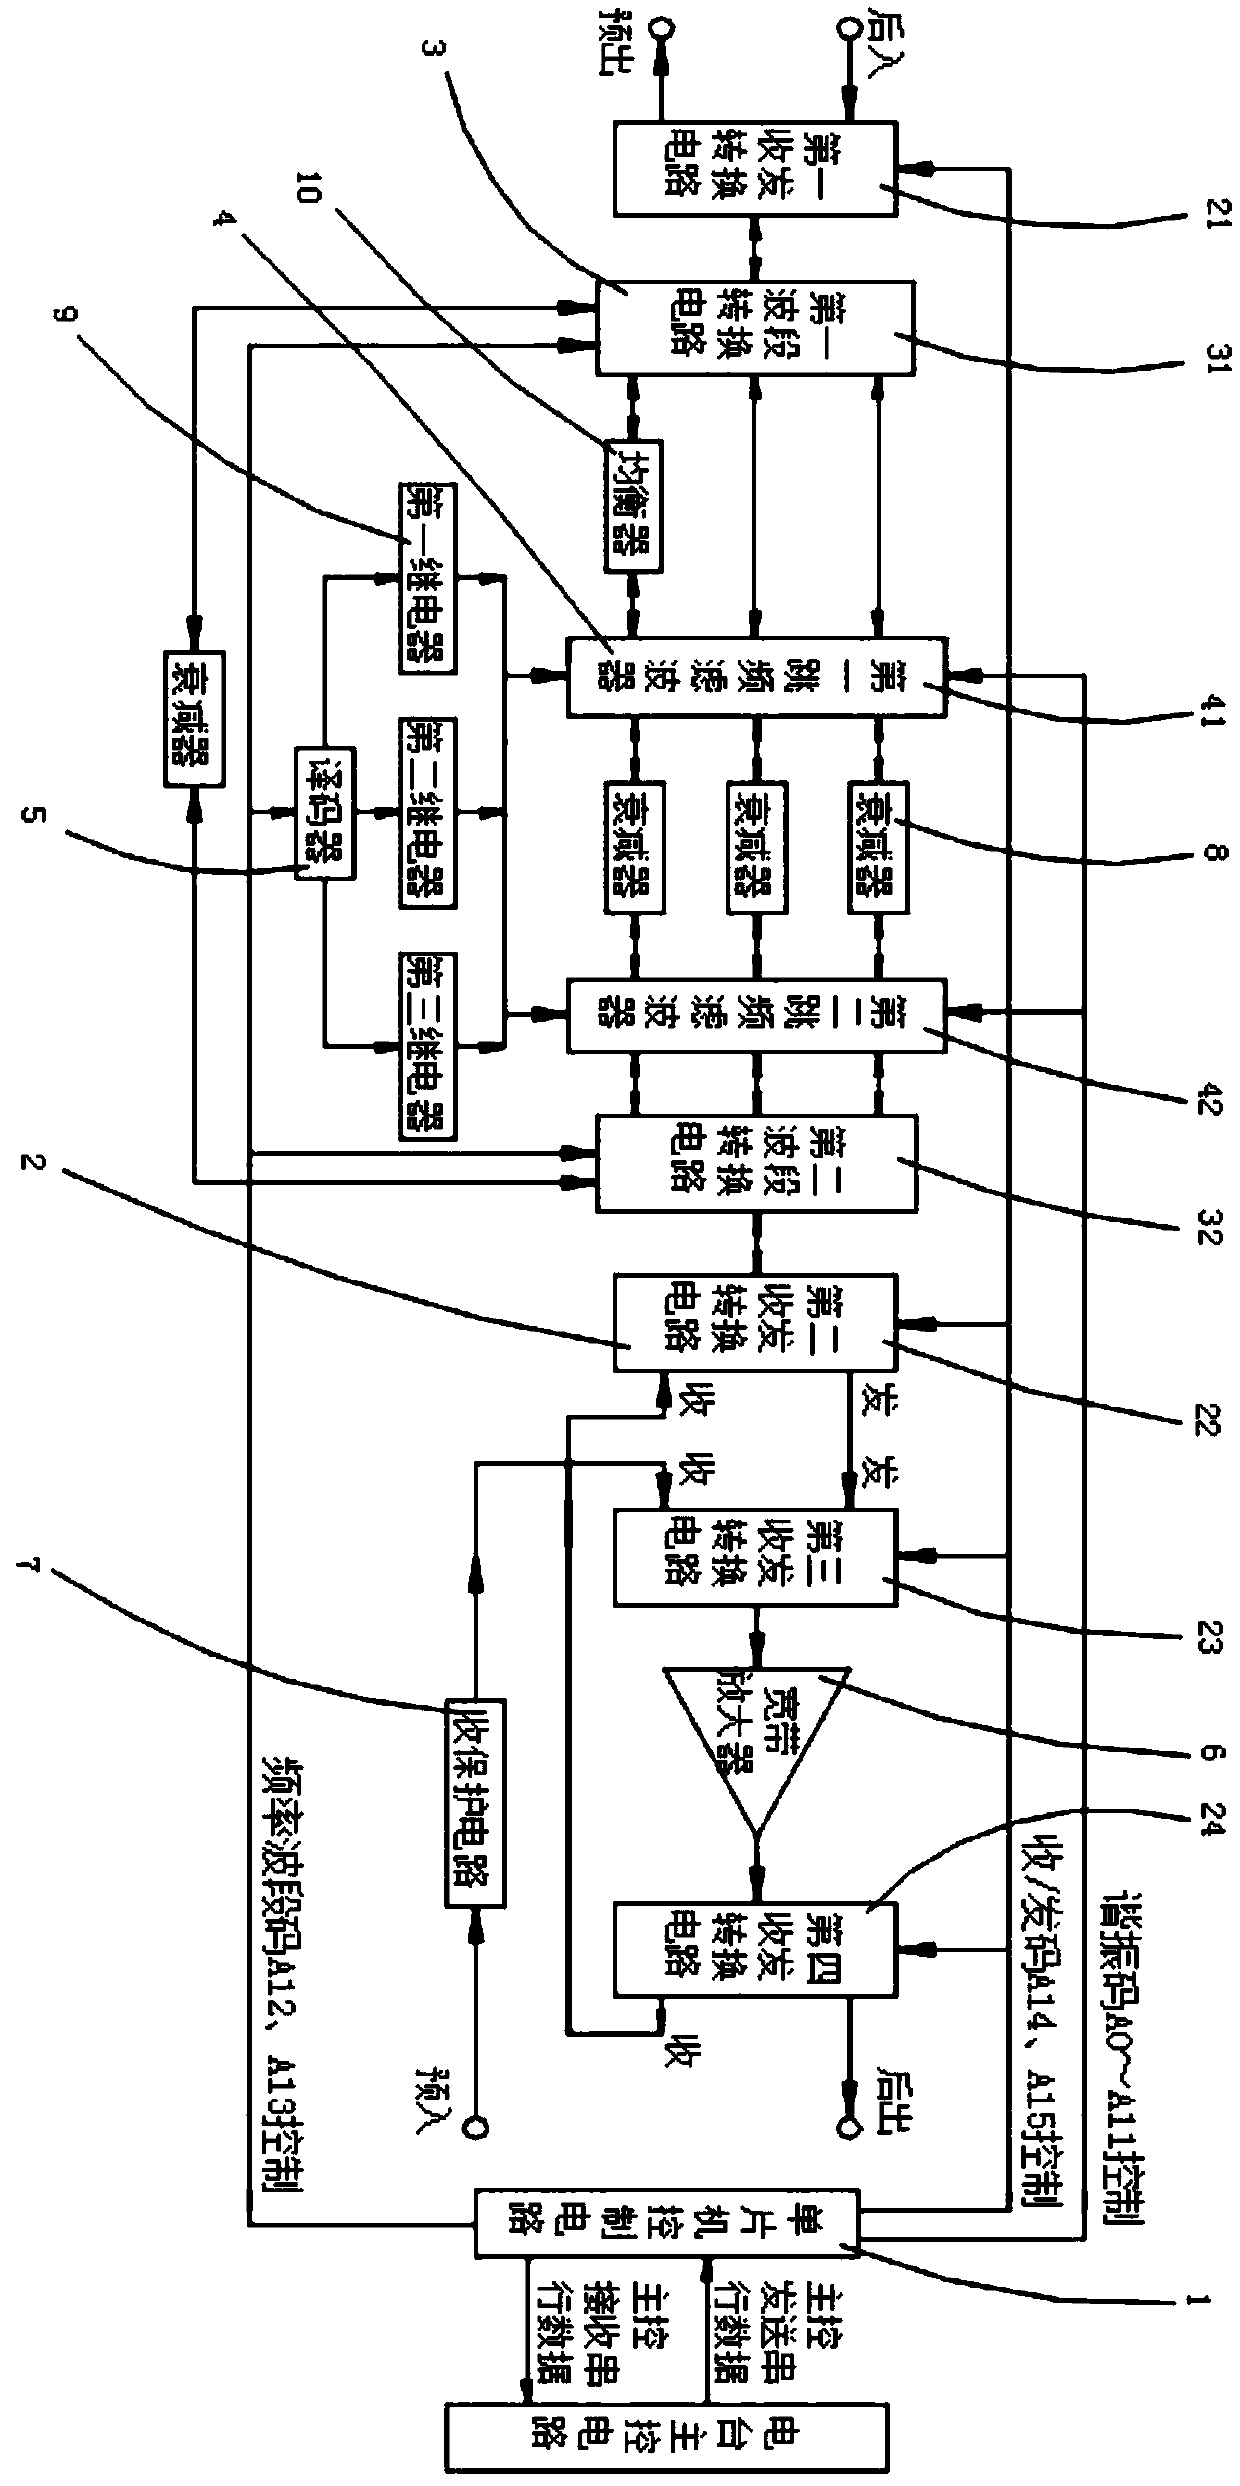 A Shortwave Prognostic Selector Control System